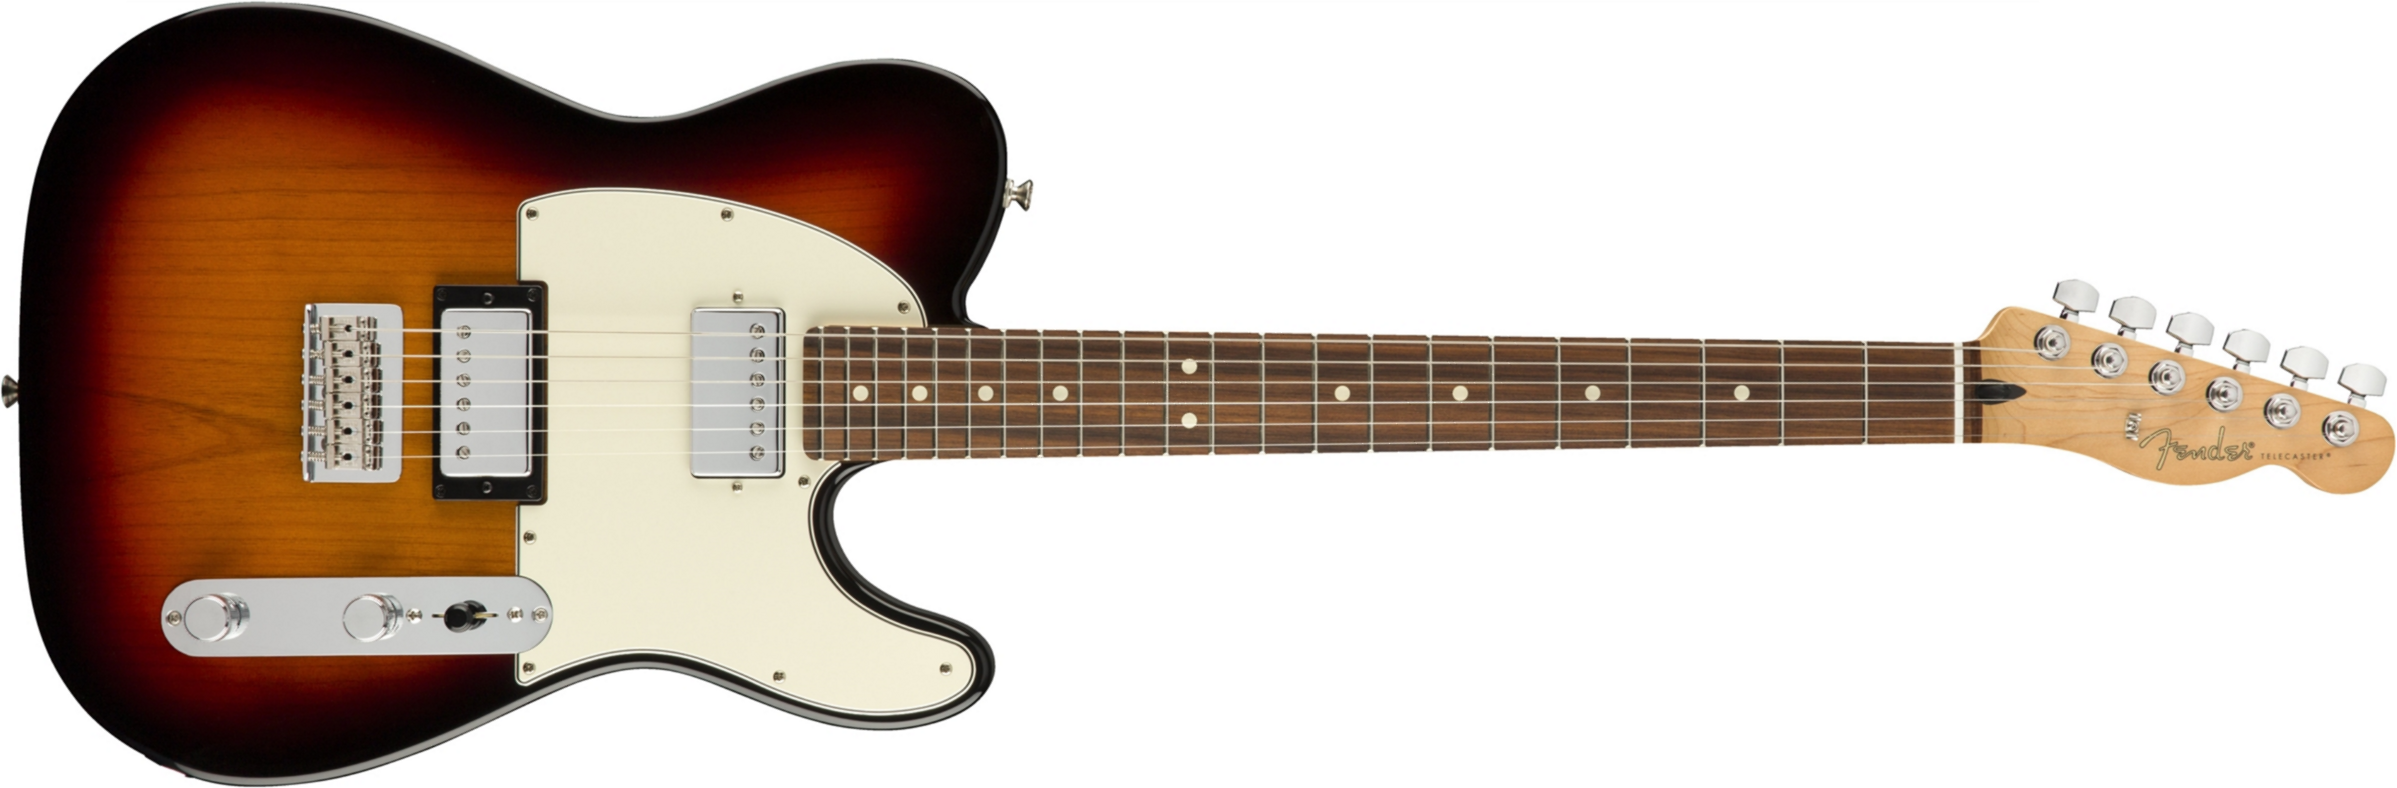 Fender Tele Player Mex Hh Pf - 3-color Sunburst - Televorm elektrische gitaar - Main picture